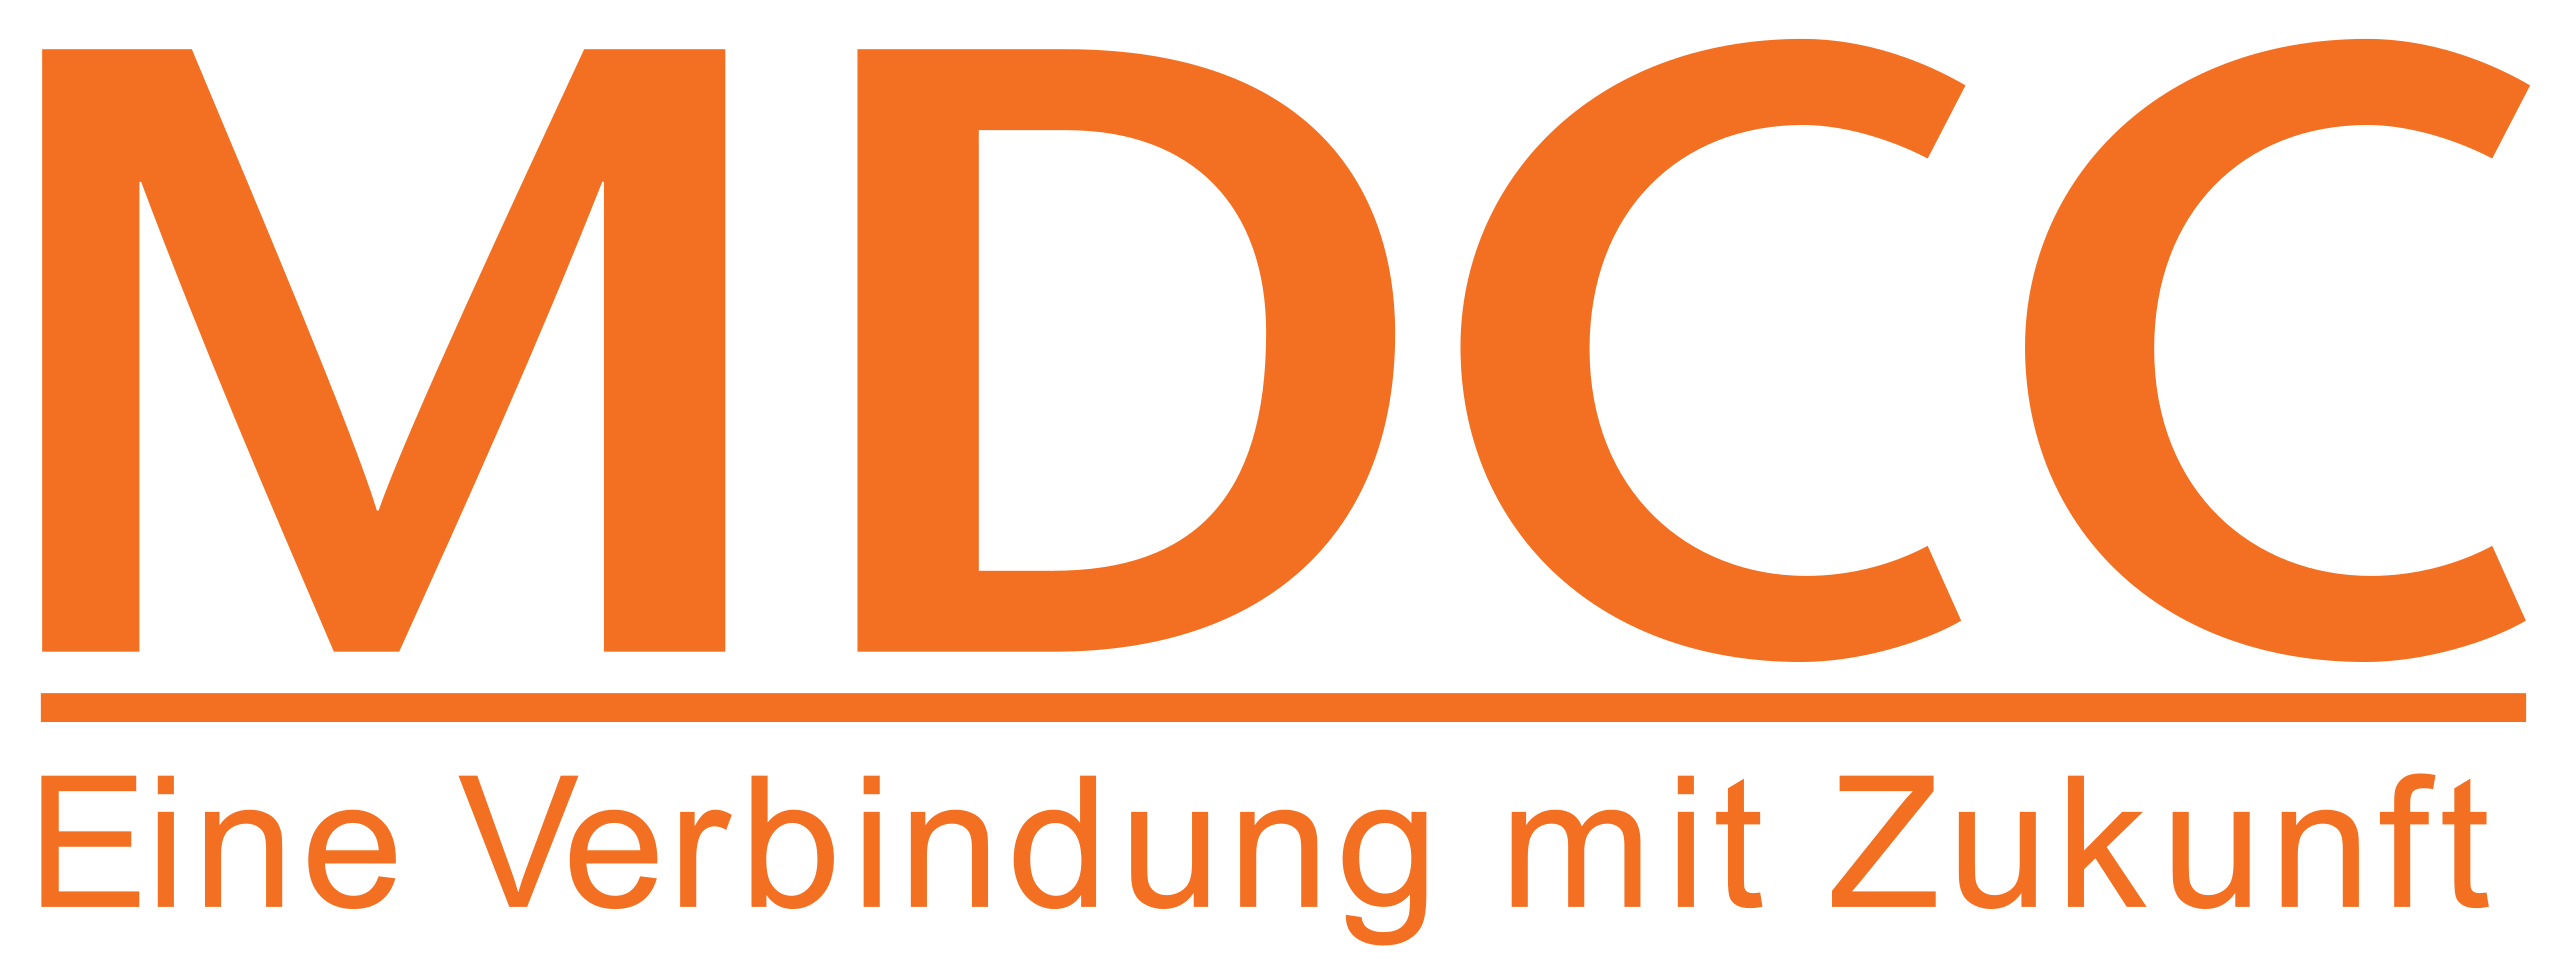 MDCC-Logo